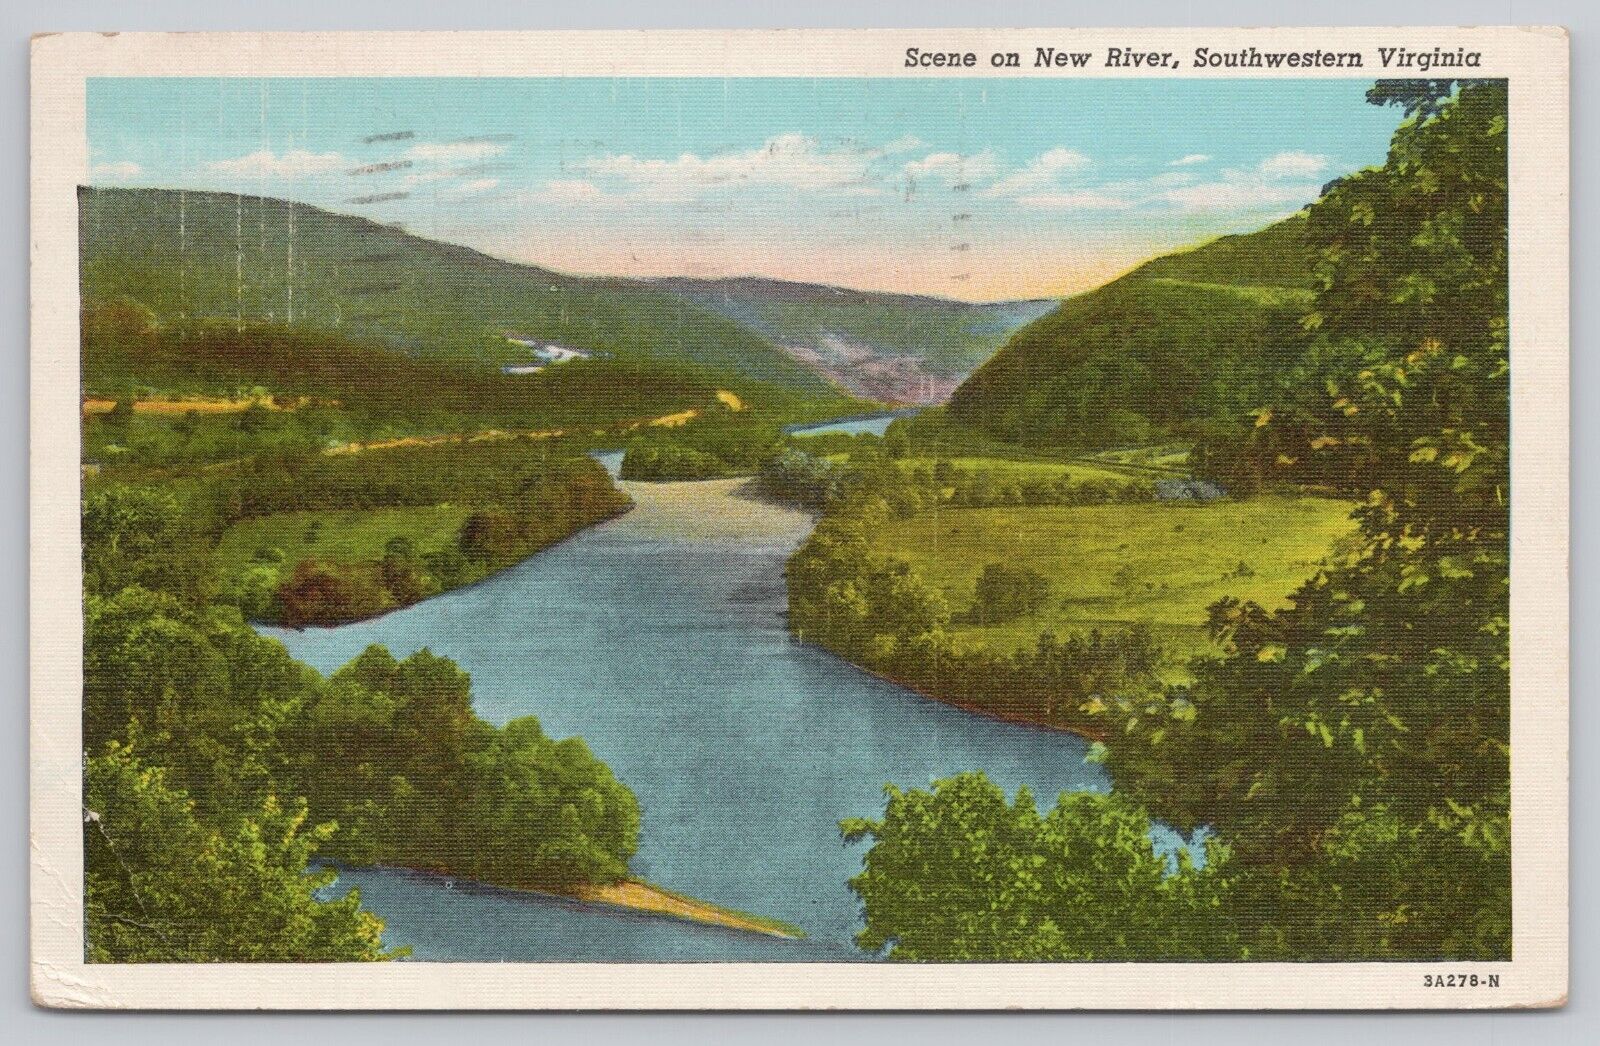 Southwestern Virginia, New River Scenic View, Vintage Postcard